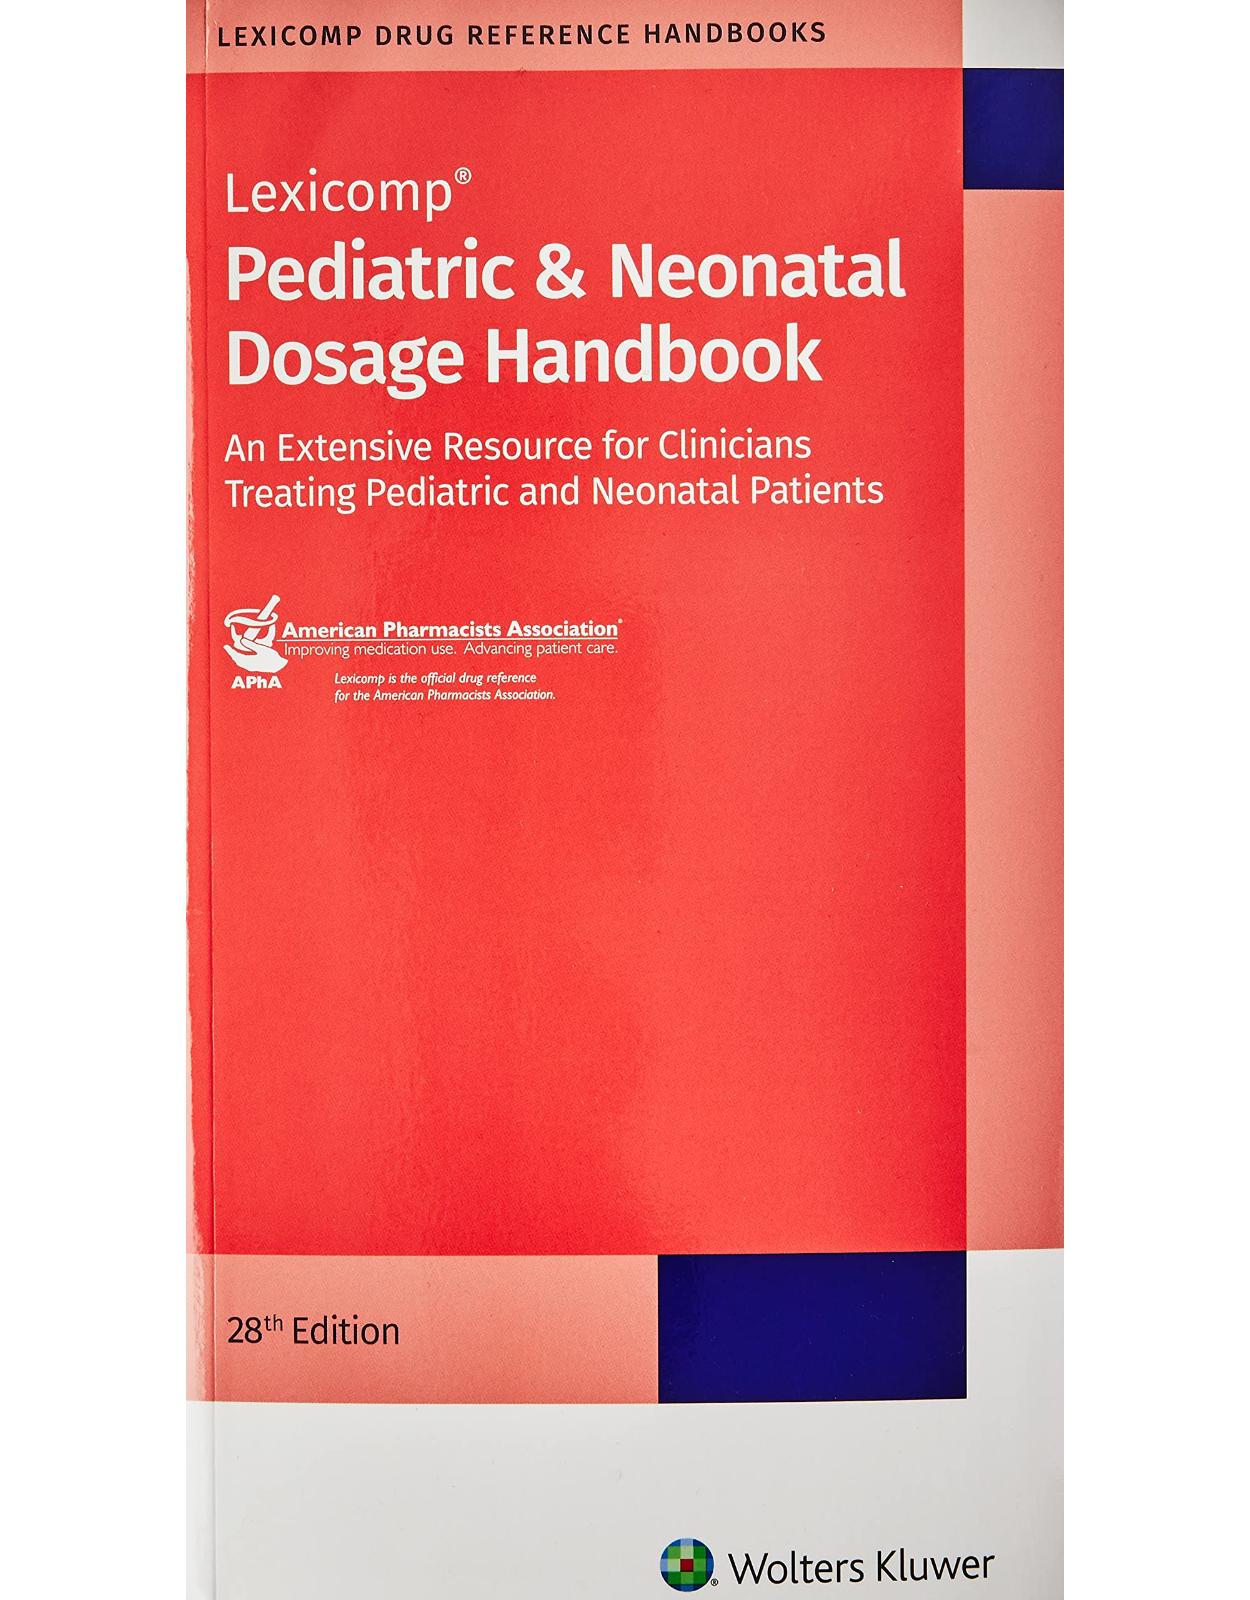 The Lexicomp Pediatric & Neonatal Dosage Handbook